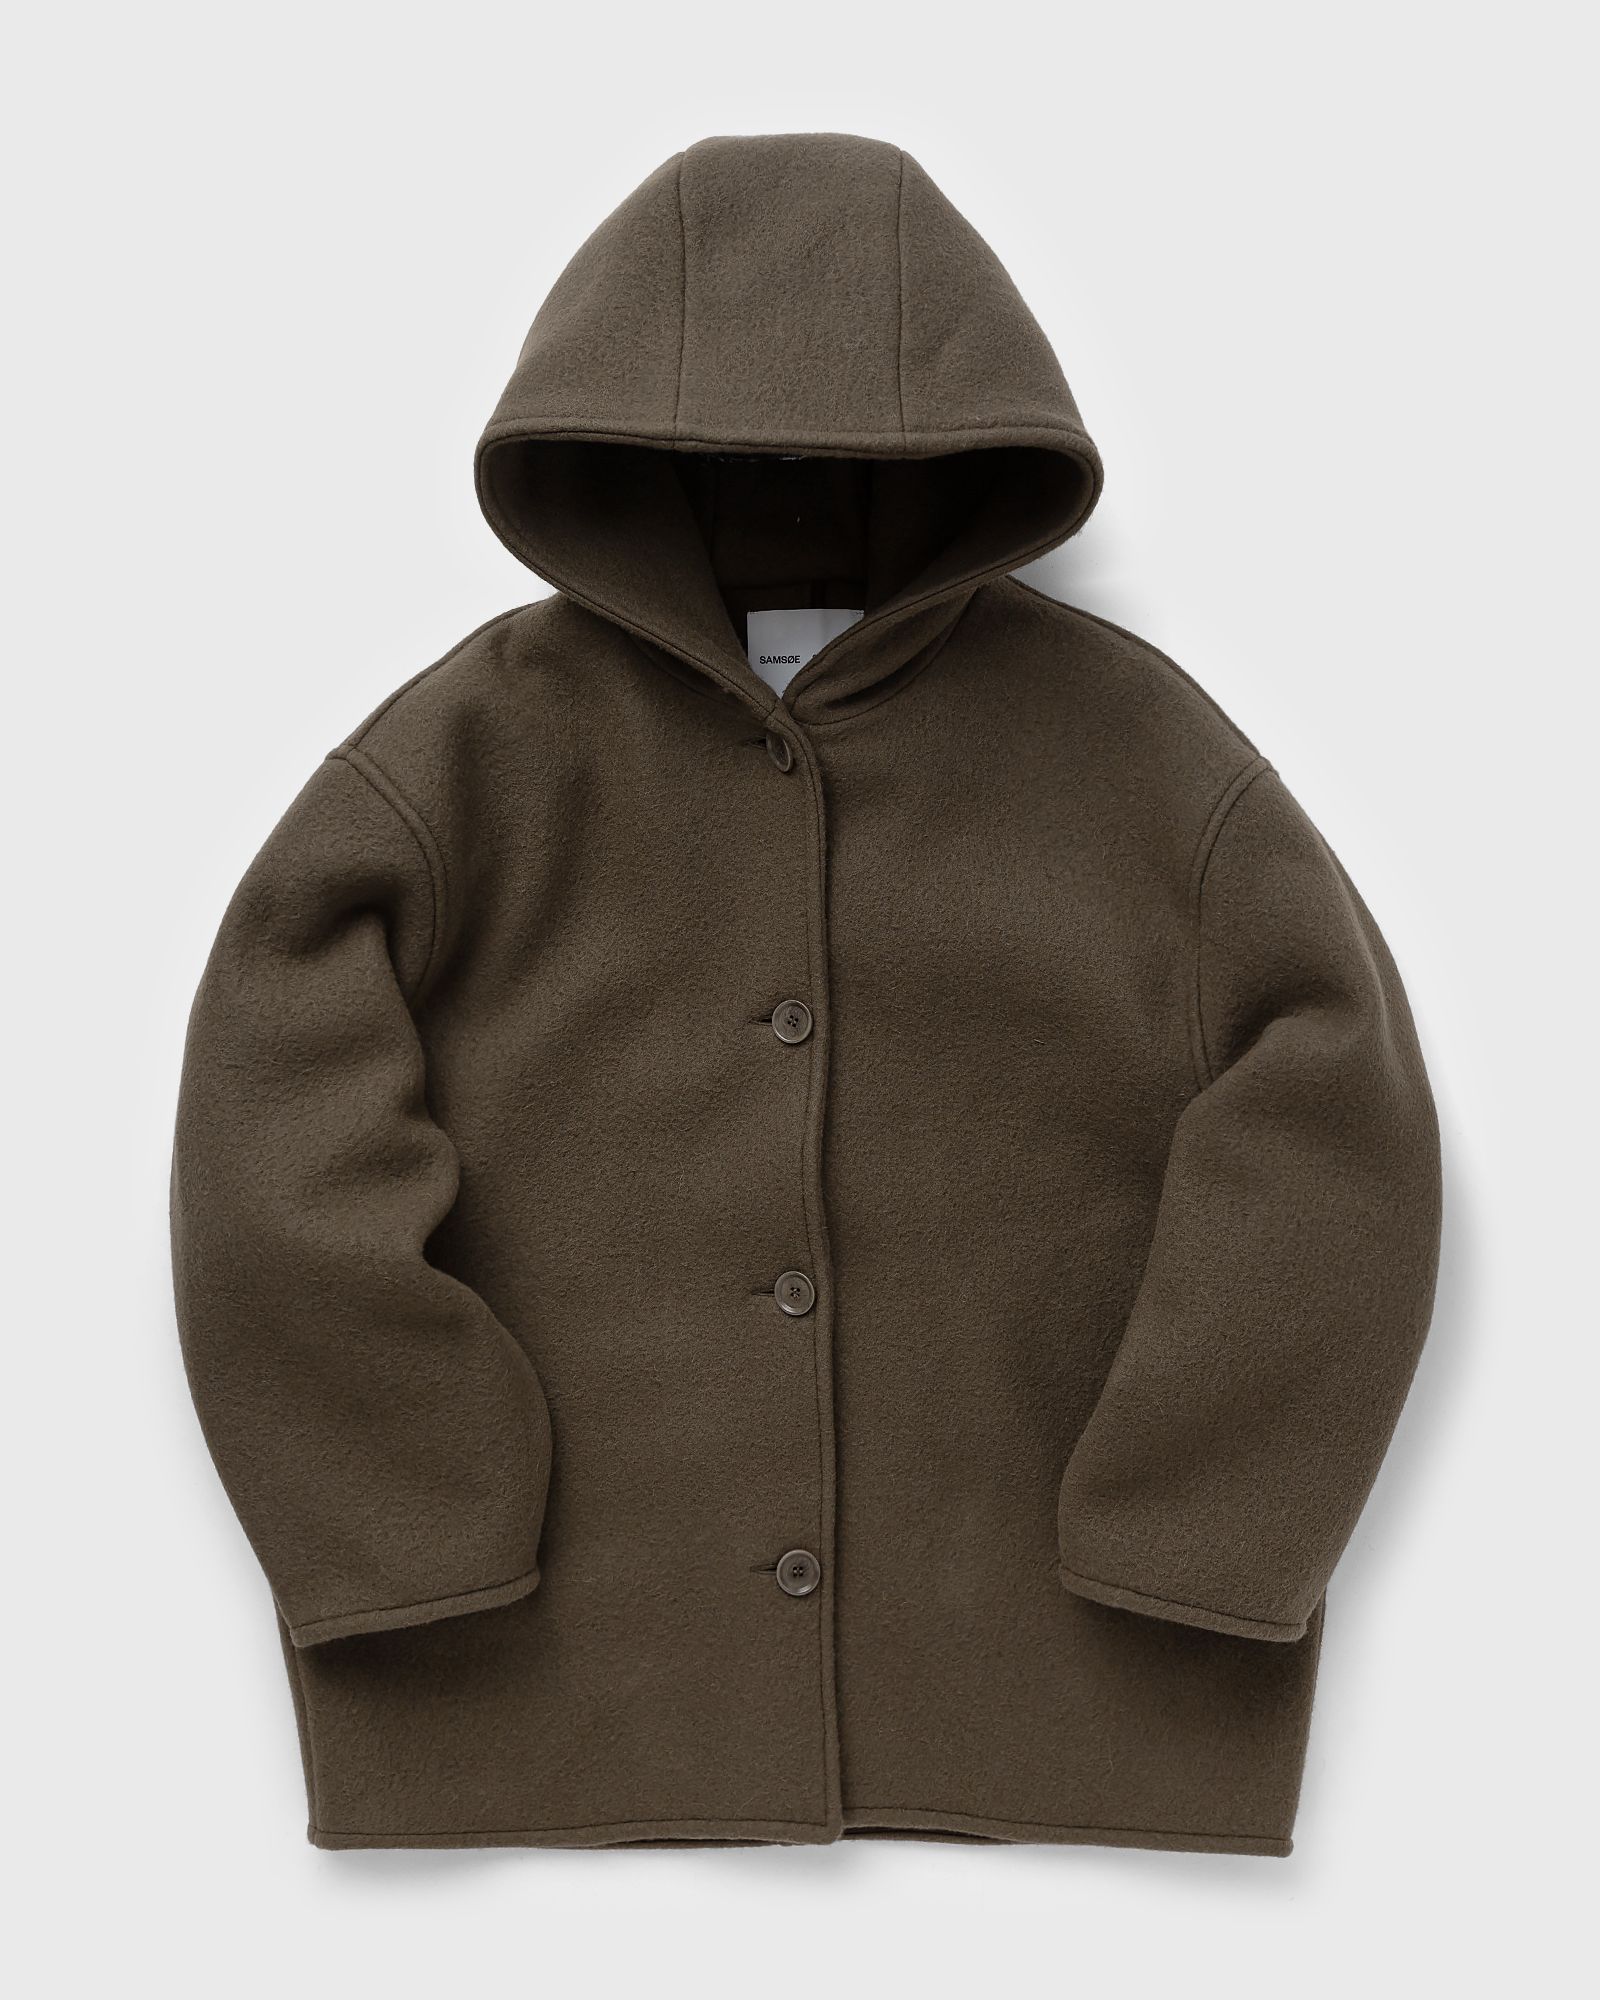 Samsøe & Samsøe - hanneli jacket women coats brown in größe:m/l